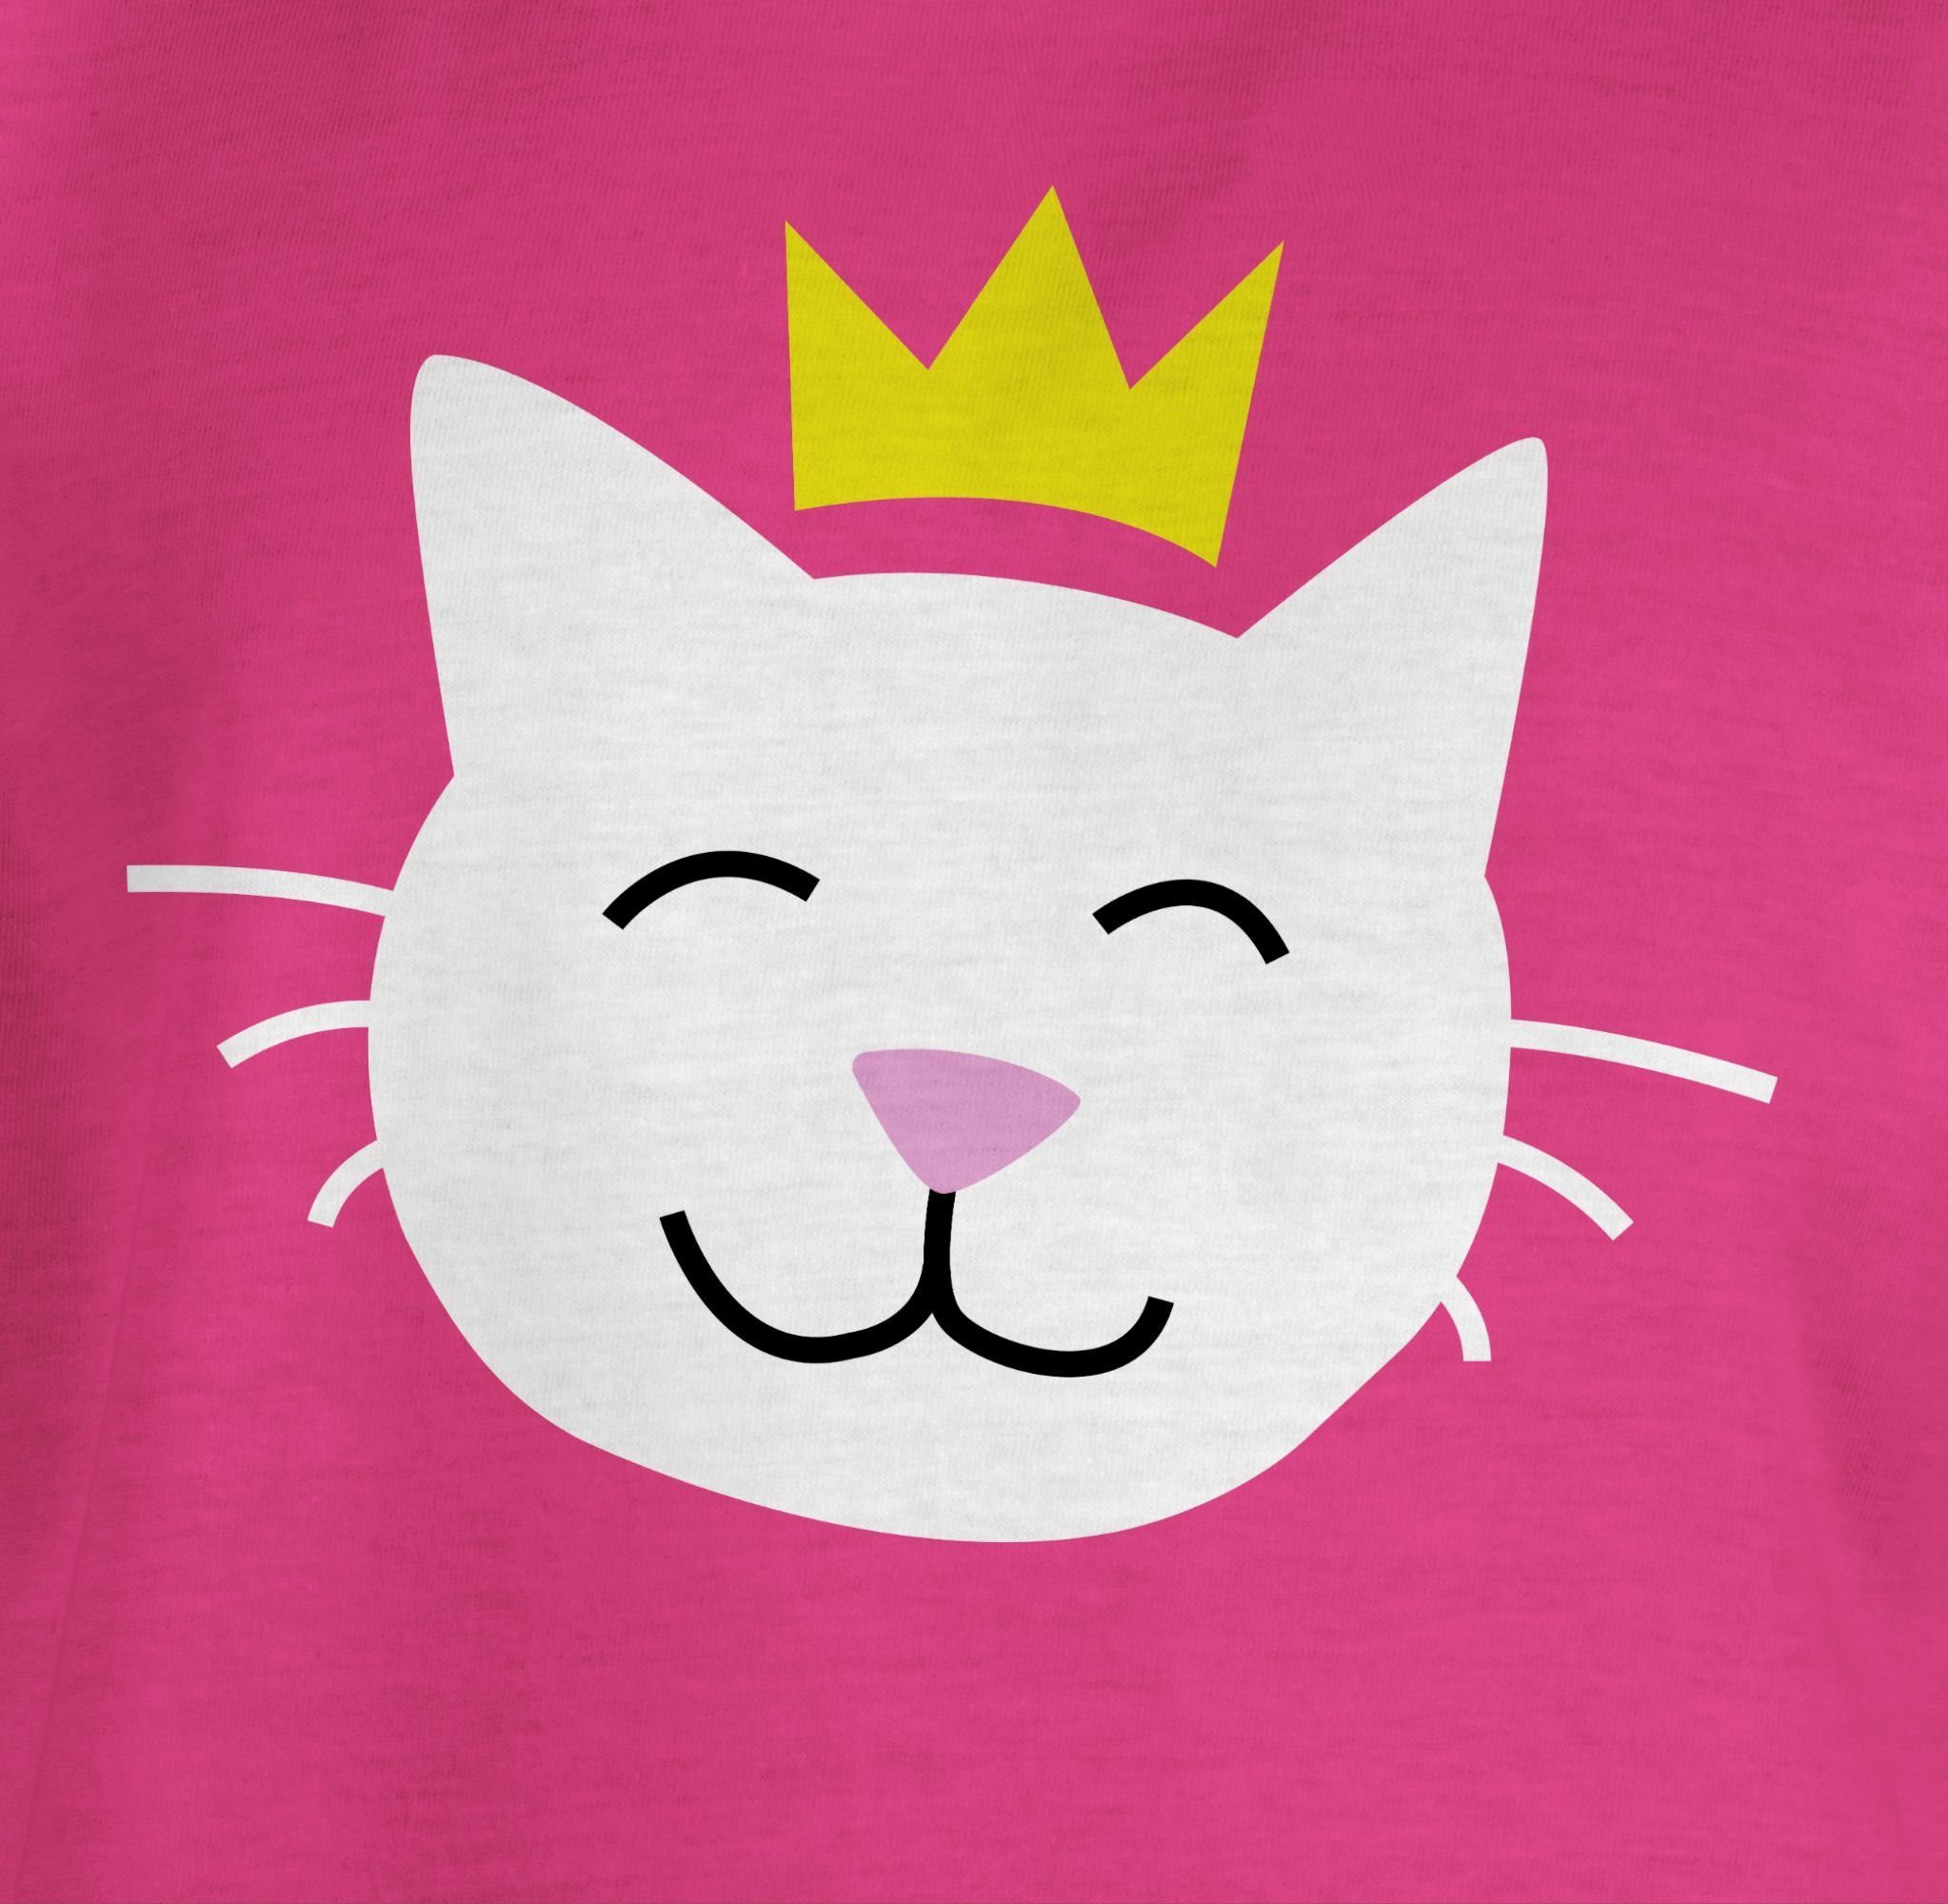 Princess - Shirtracer 1 Katze Fuchsia T-Shirt Cats Cat Katzen & Prinzessin Prinzessinnen Karneval Fasching Katzenkostüm